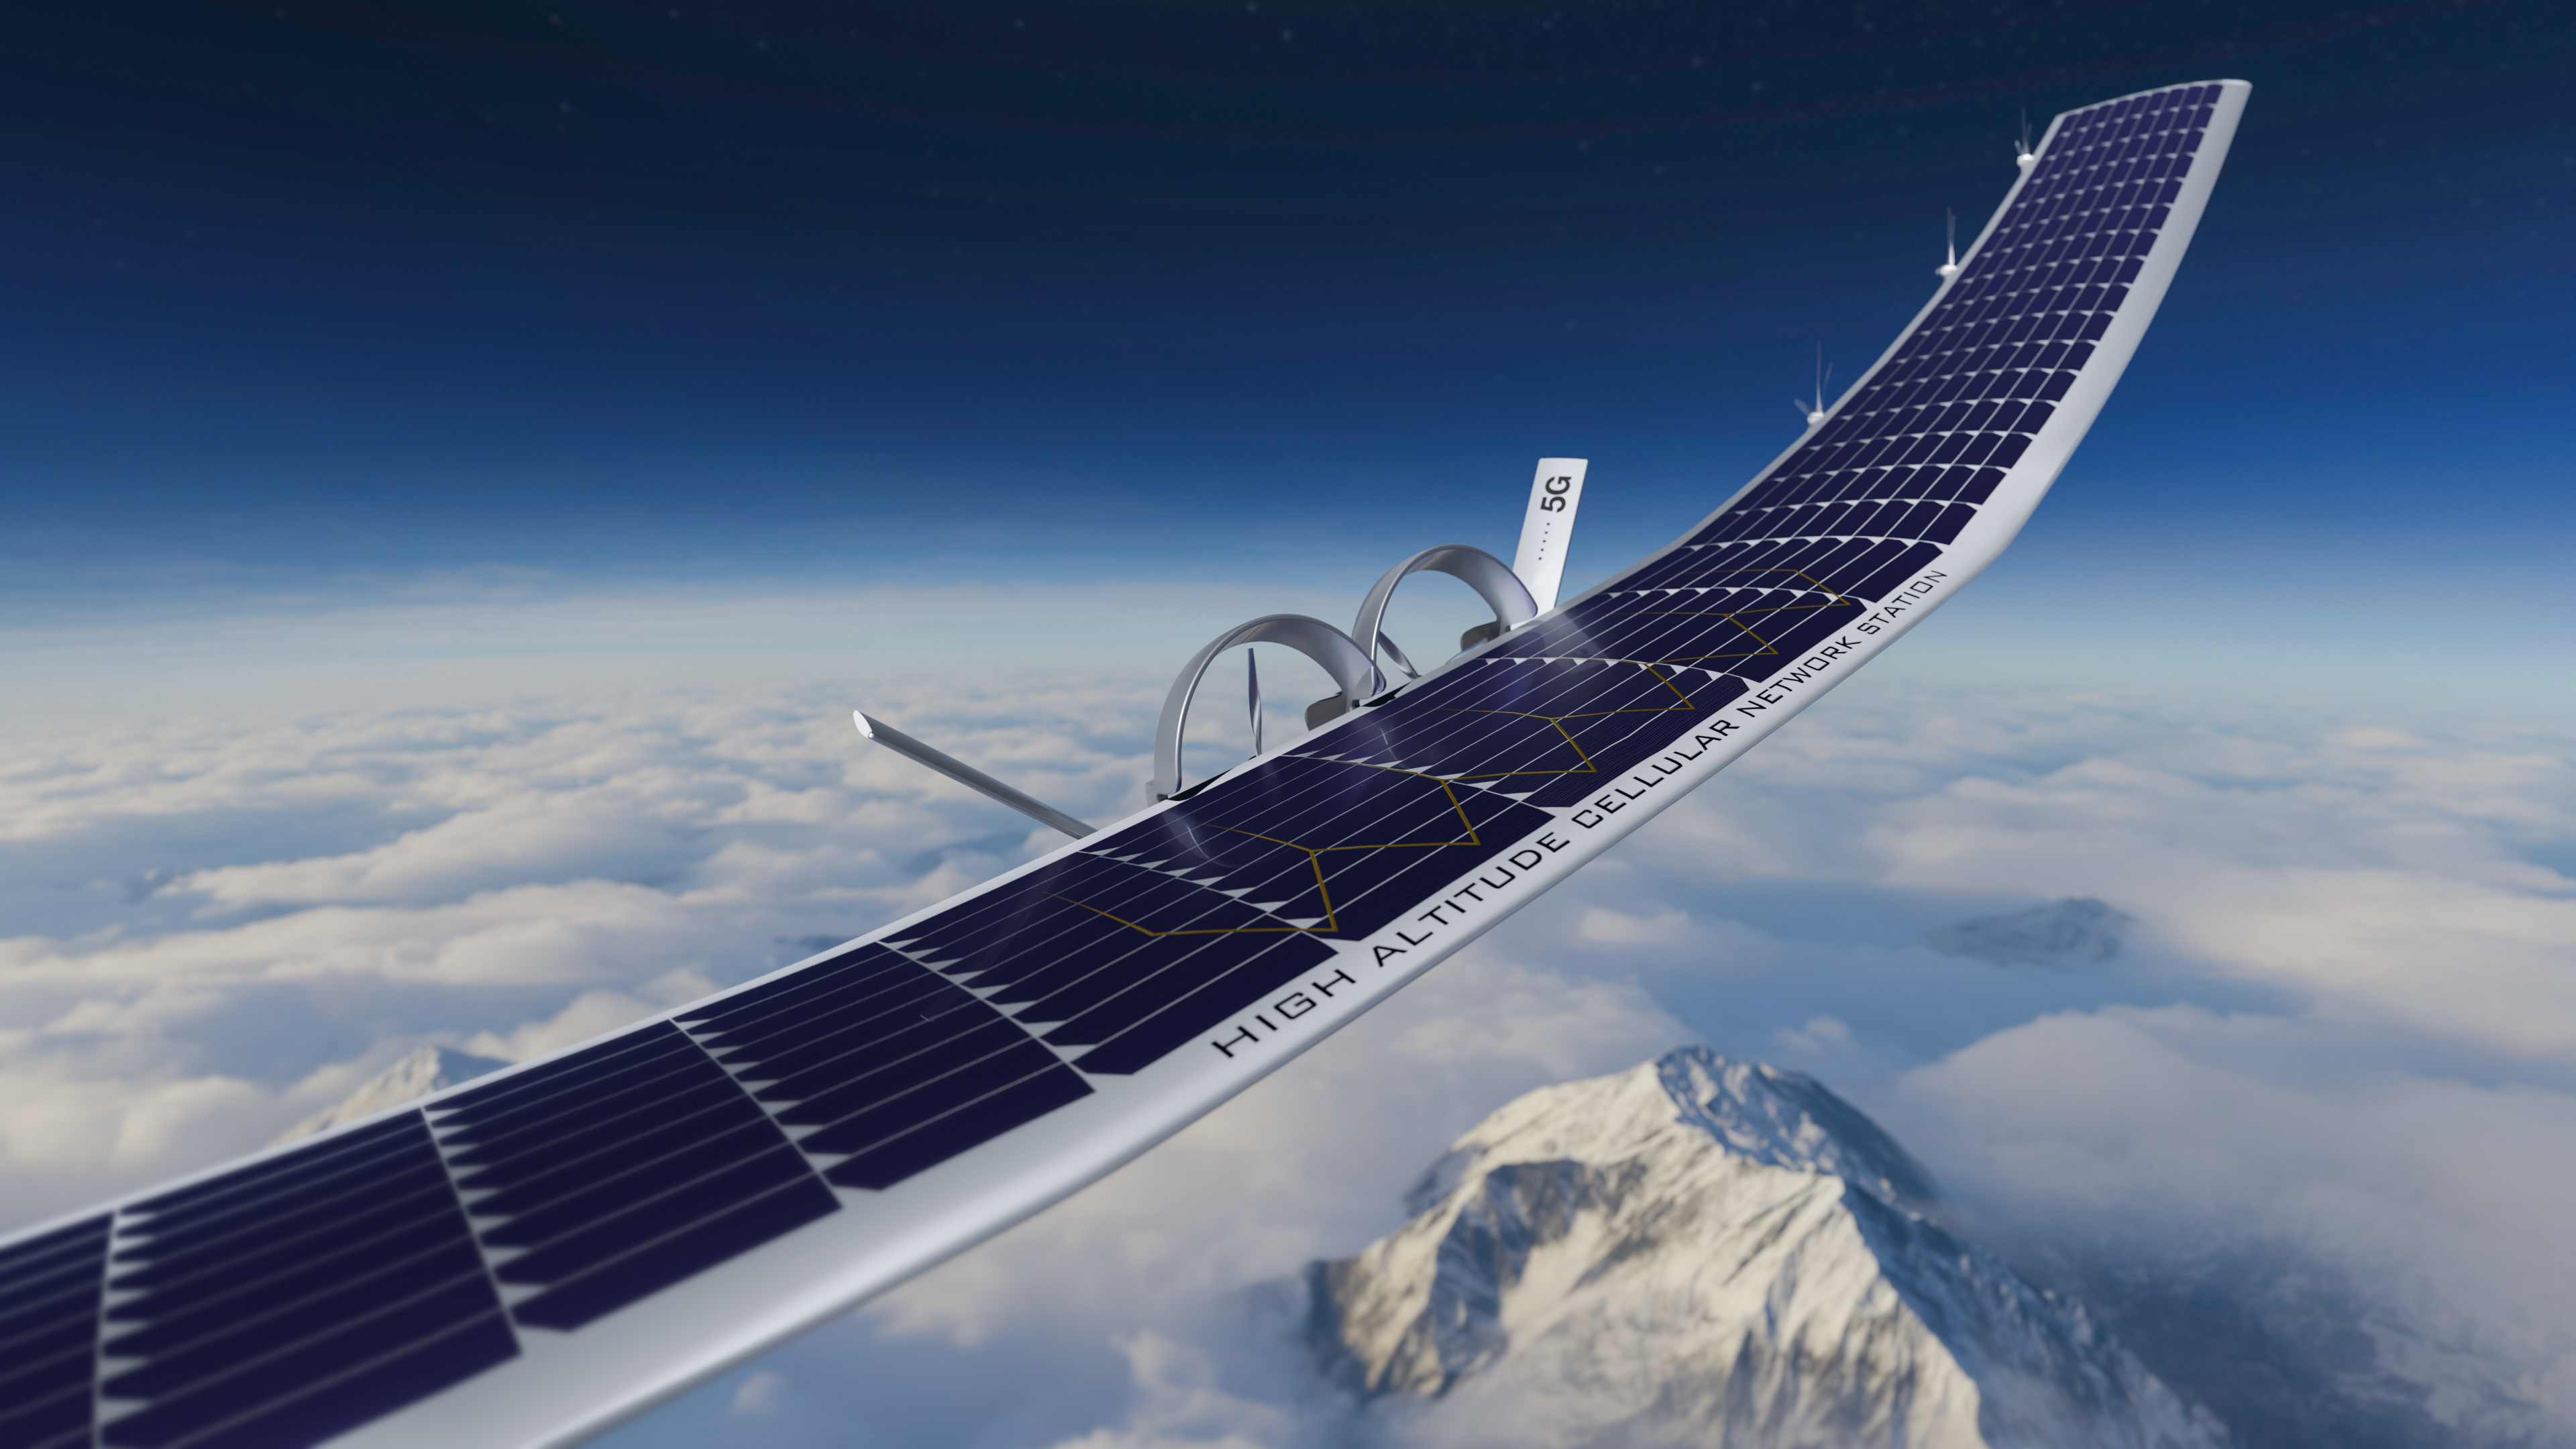 SHARP COMPOUND SOLAR MODULE FOR FUTURE MOBILITY